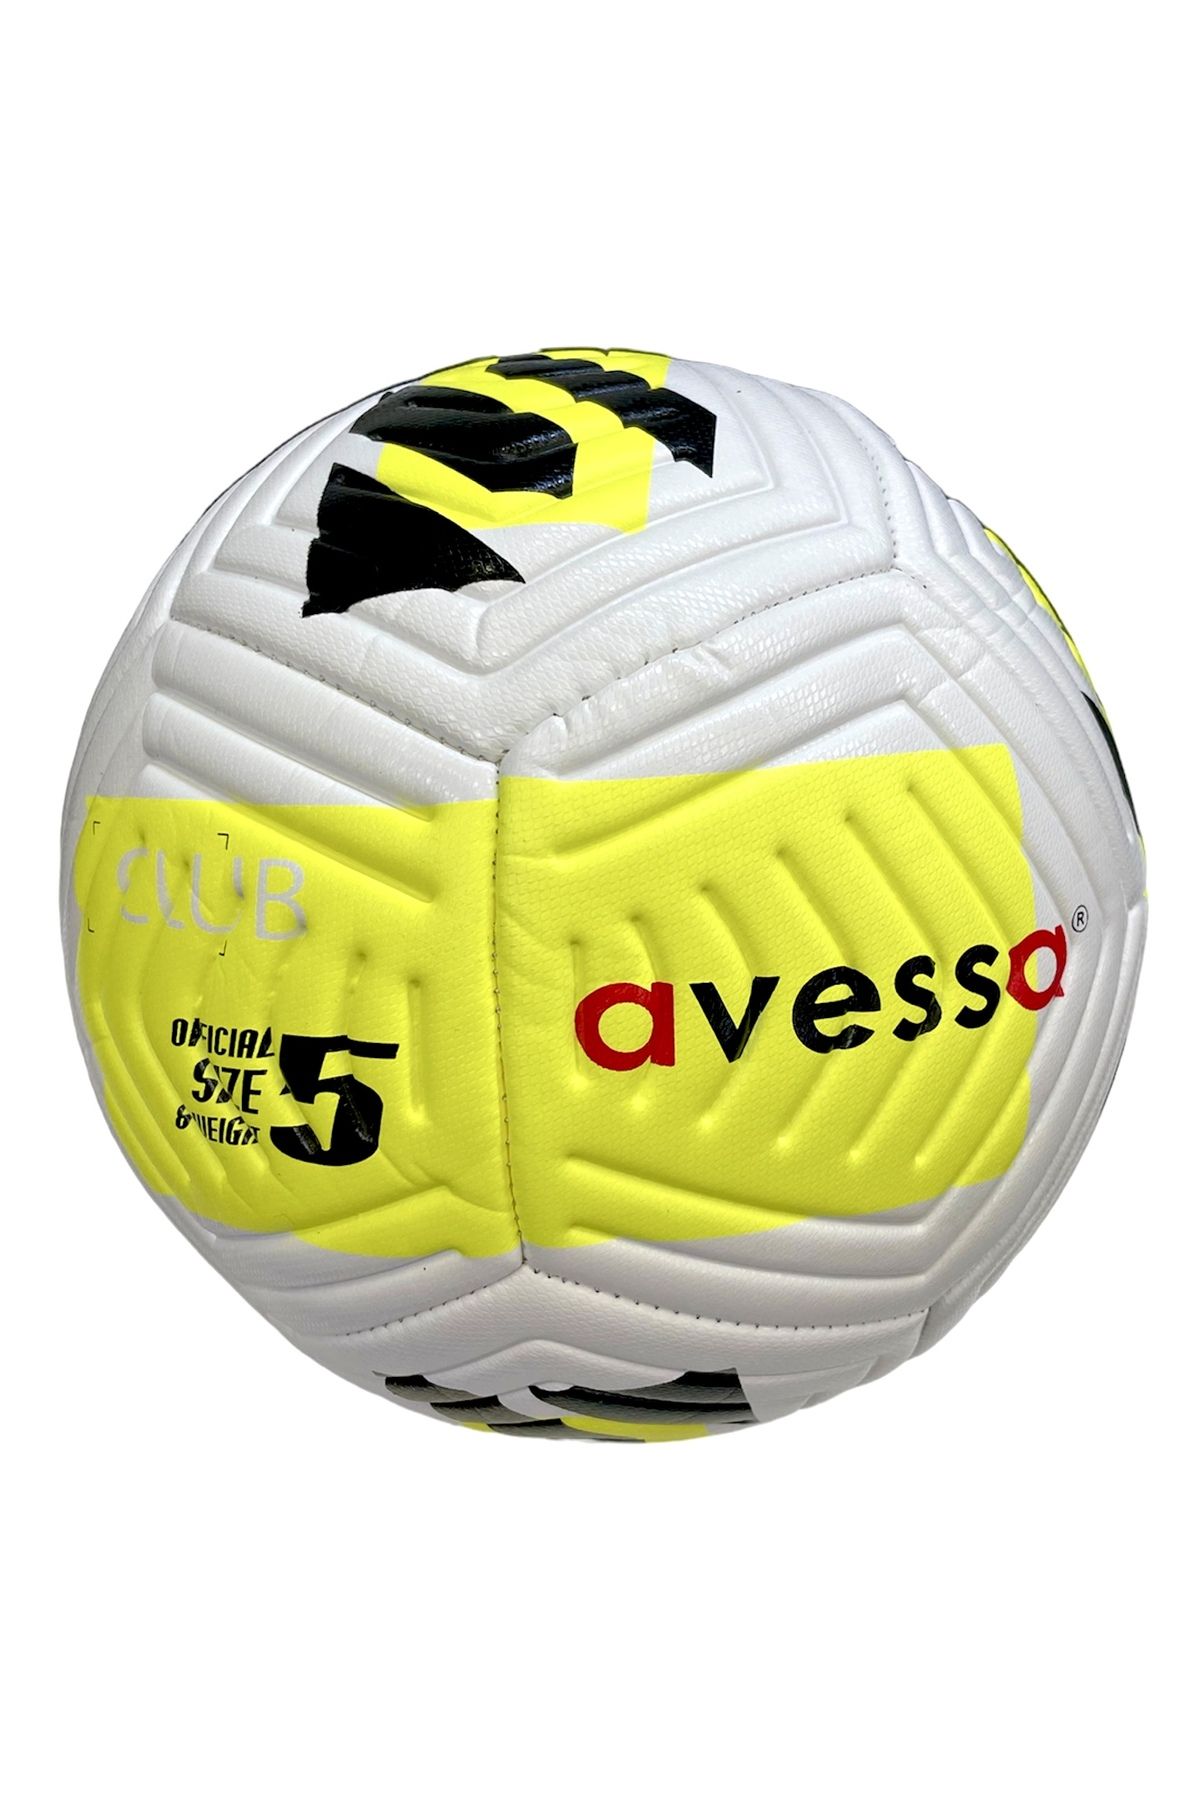 Avessa FT-400 4 Astar No:5 Strike Soccer Ball Futbol Maç Topu Orta Sertlikte Tüm Zeminlere Uygun